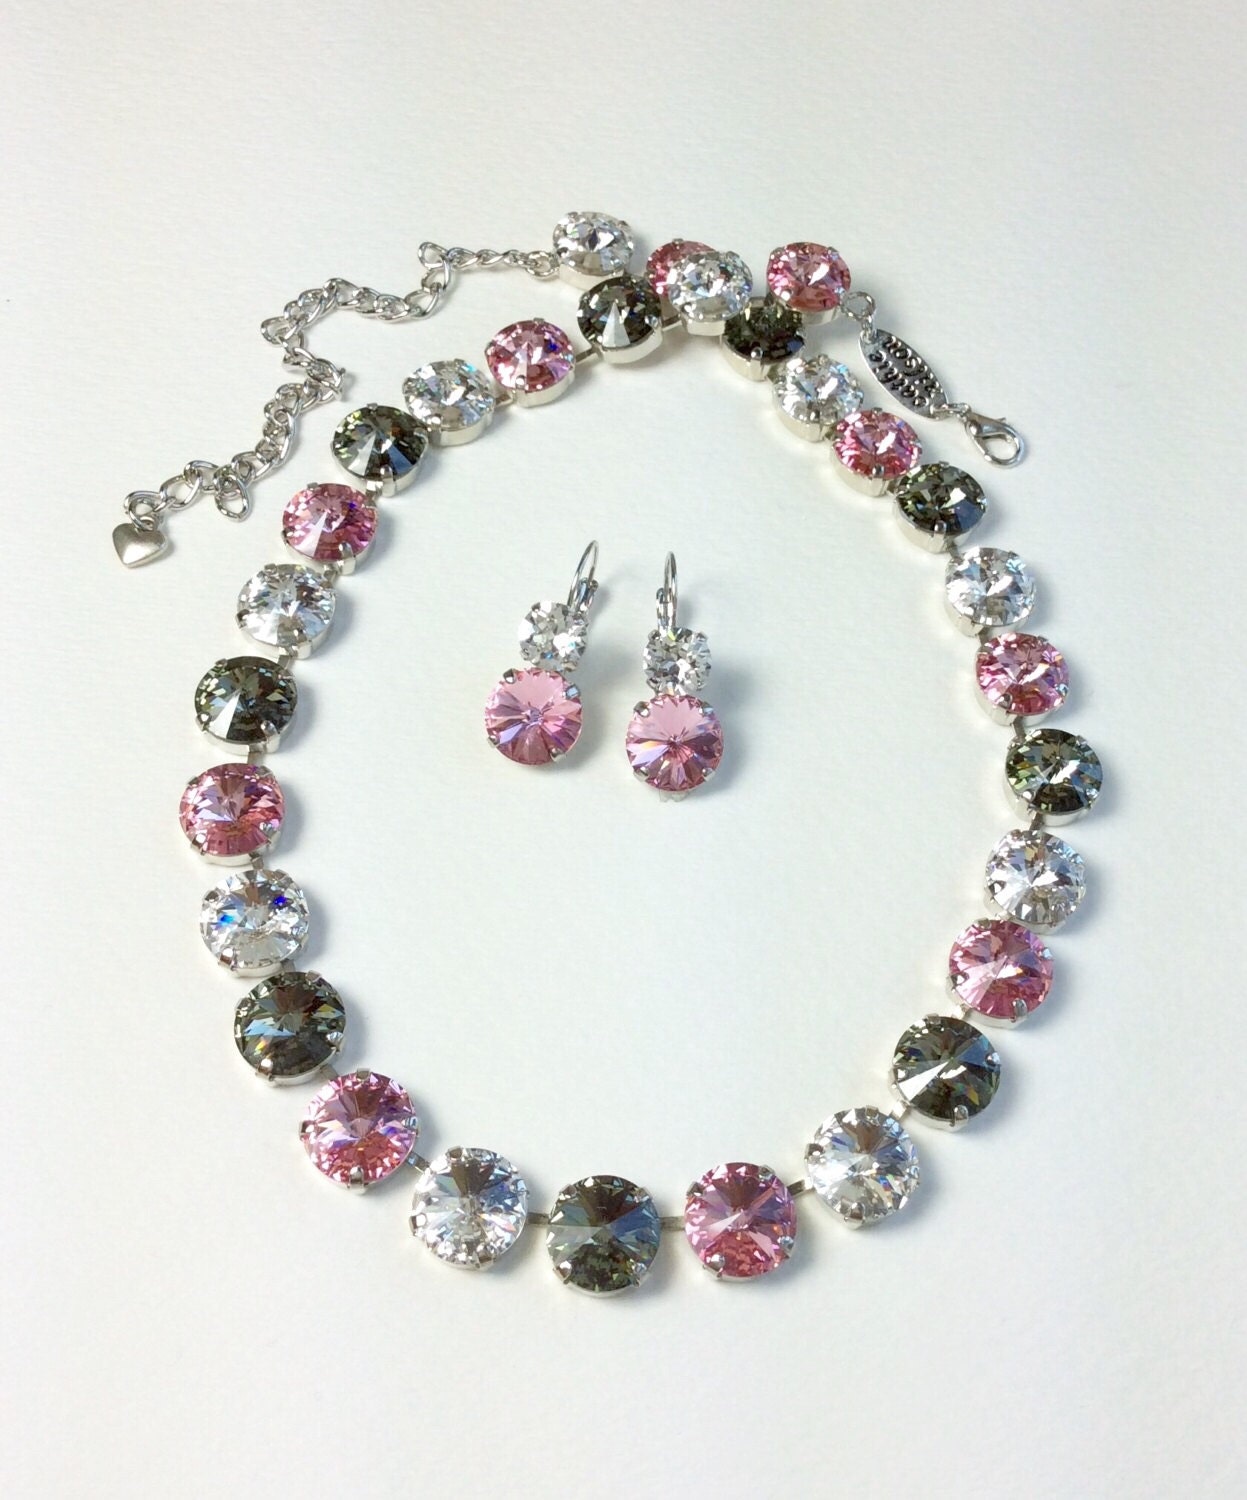 Swarovski Crystal 12MM Necklace Bracelet/and Earrings - Designer Inspired - Lt. Rose, Crystal and Black Diamond - Sparkle! - FREE SHIPPING